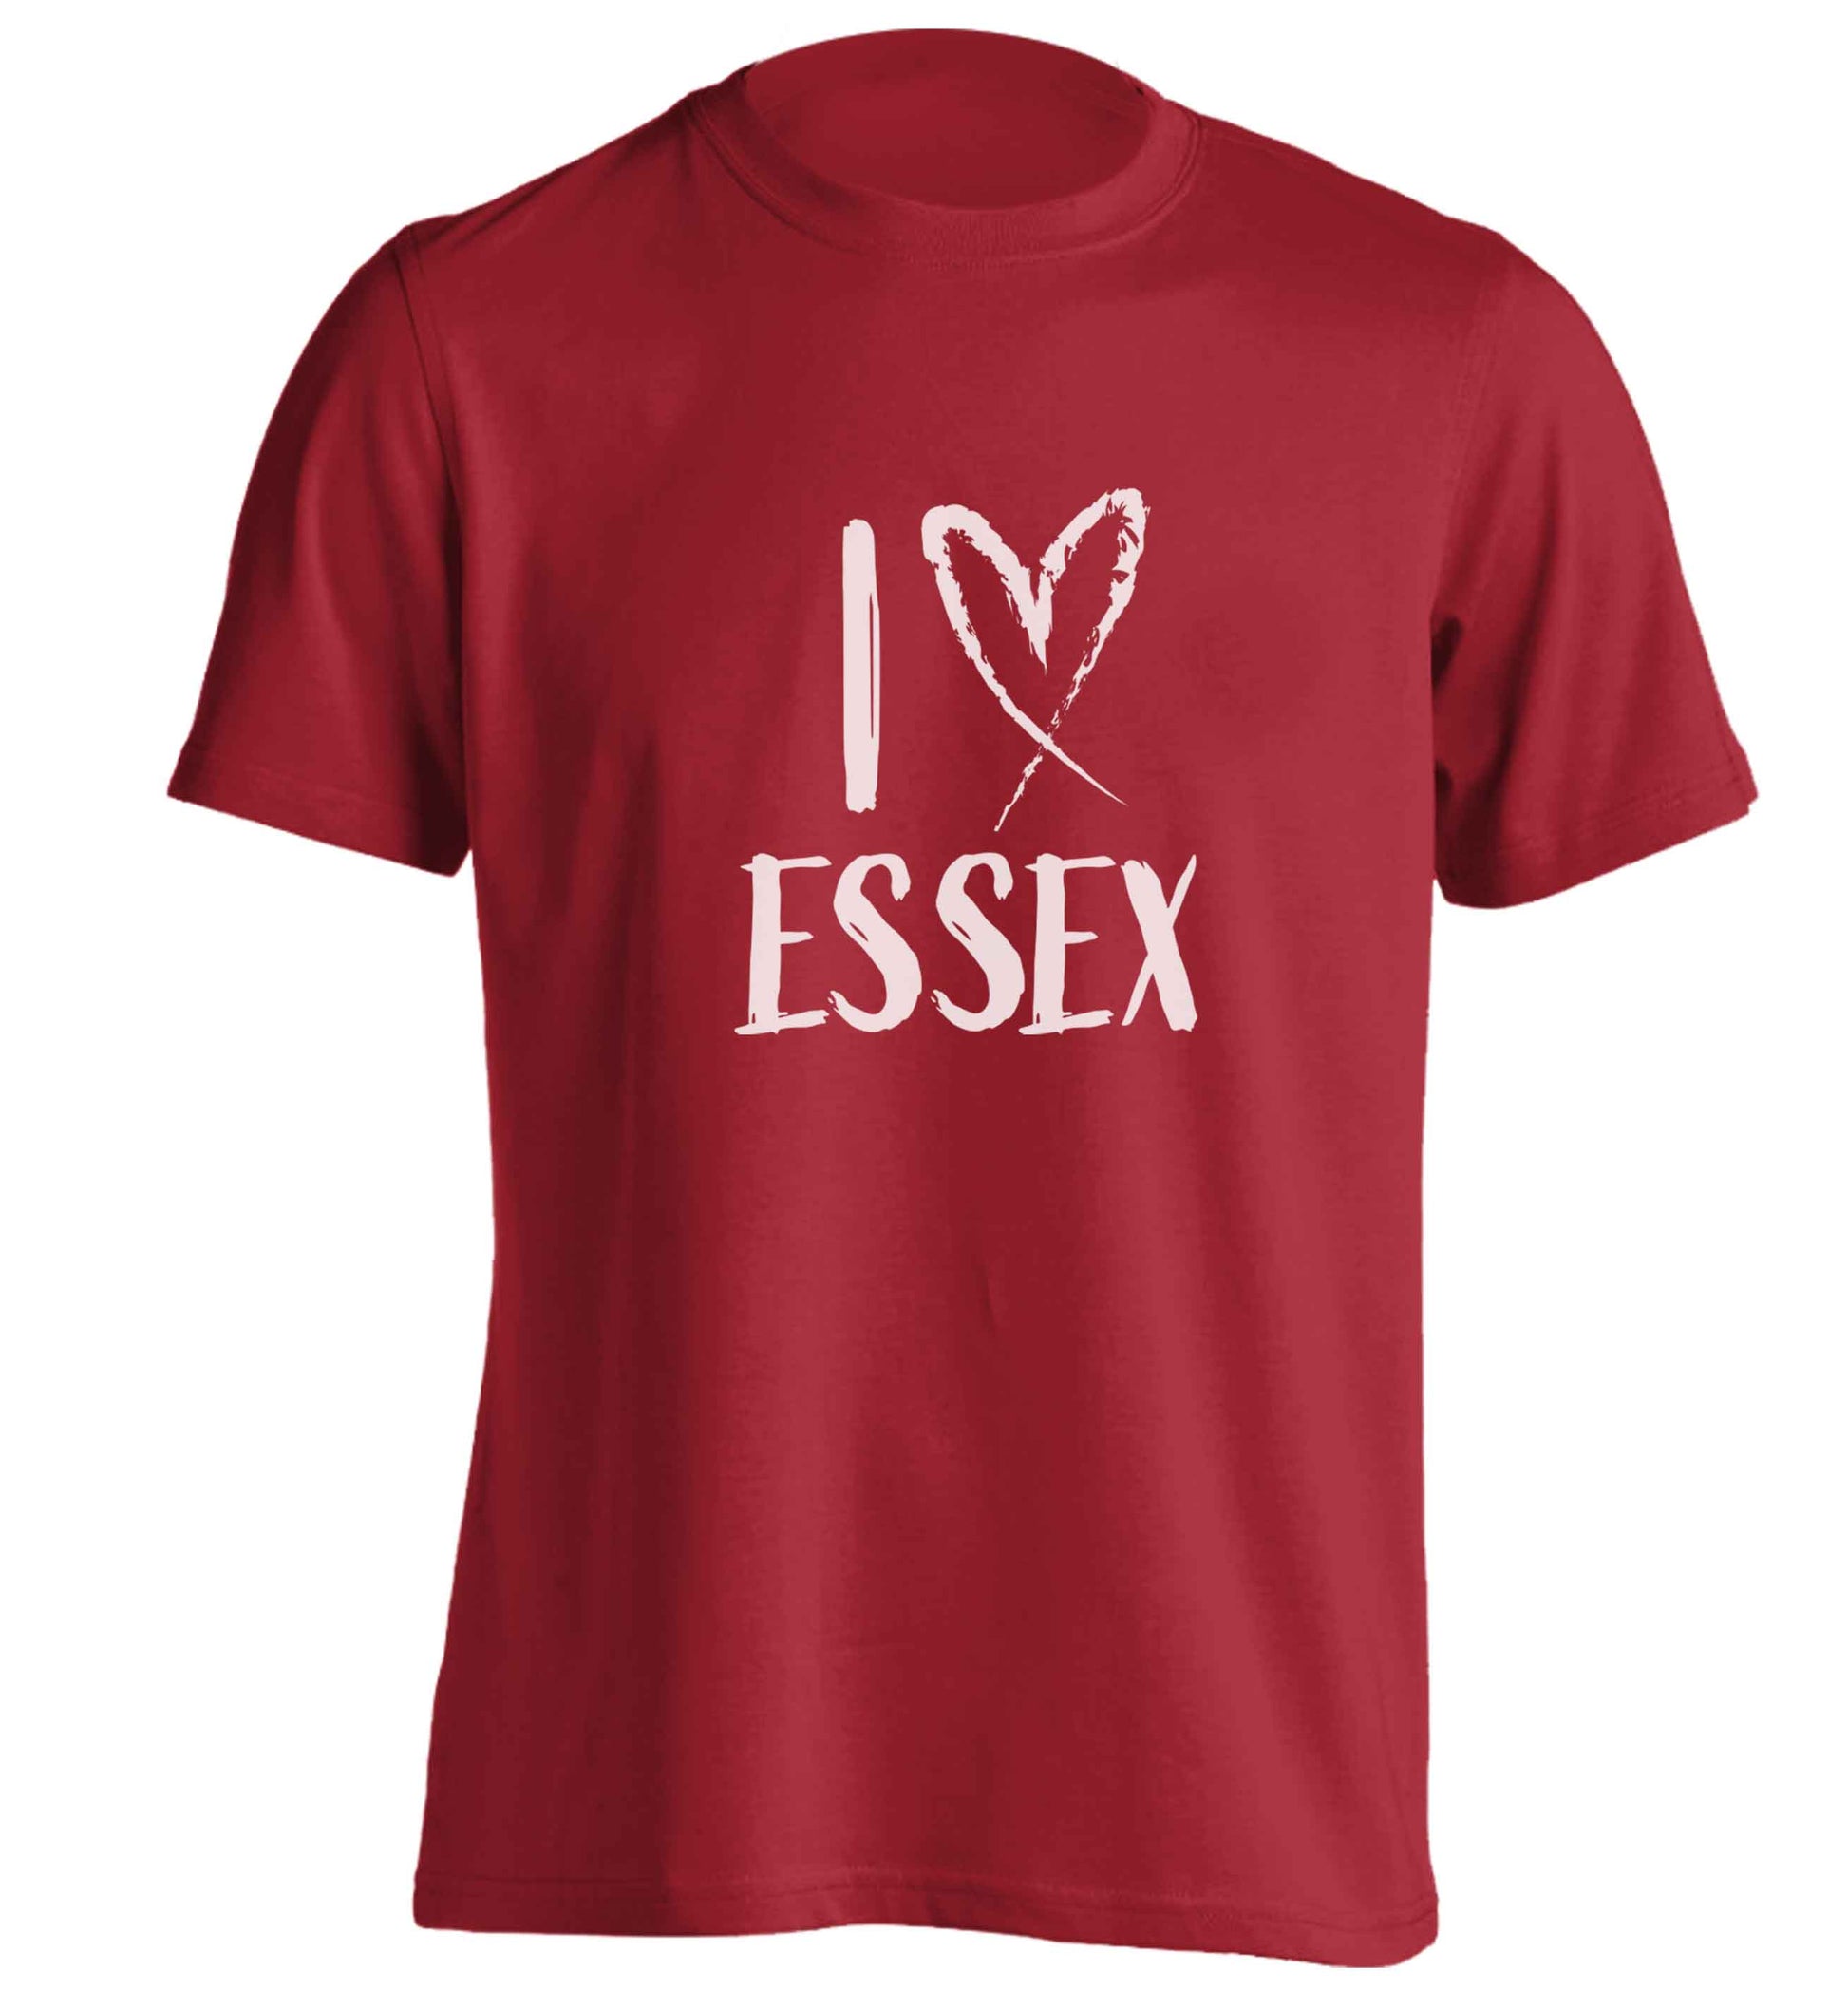 I love Essex adults unisex red Tshirt 2XL